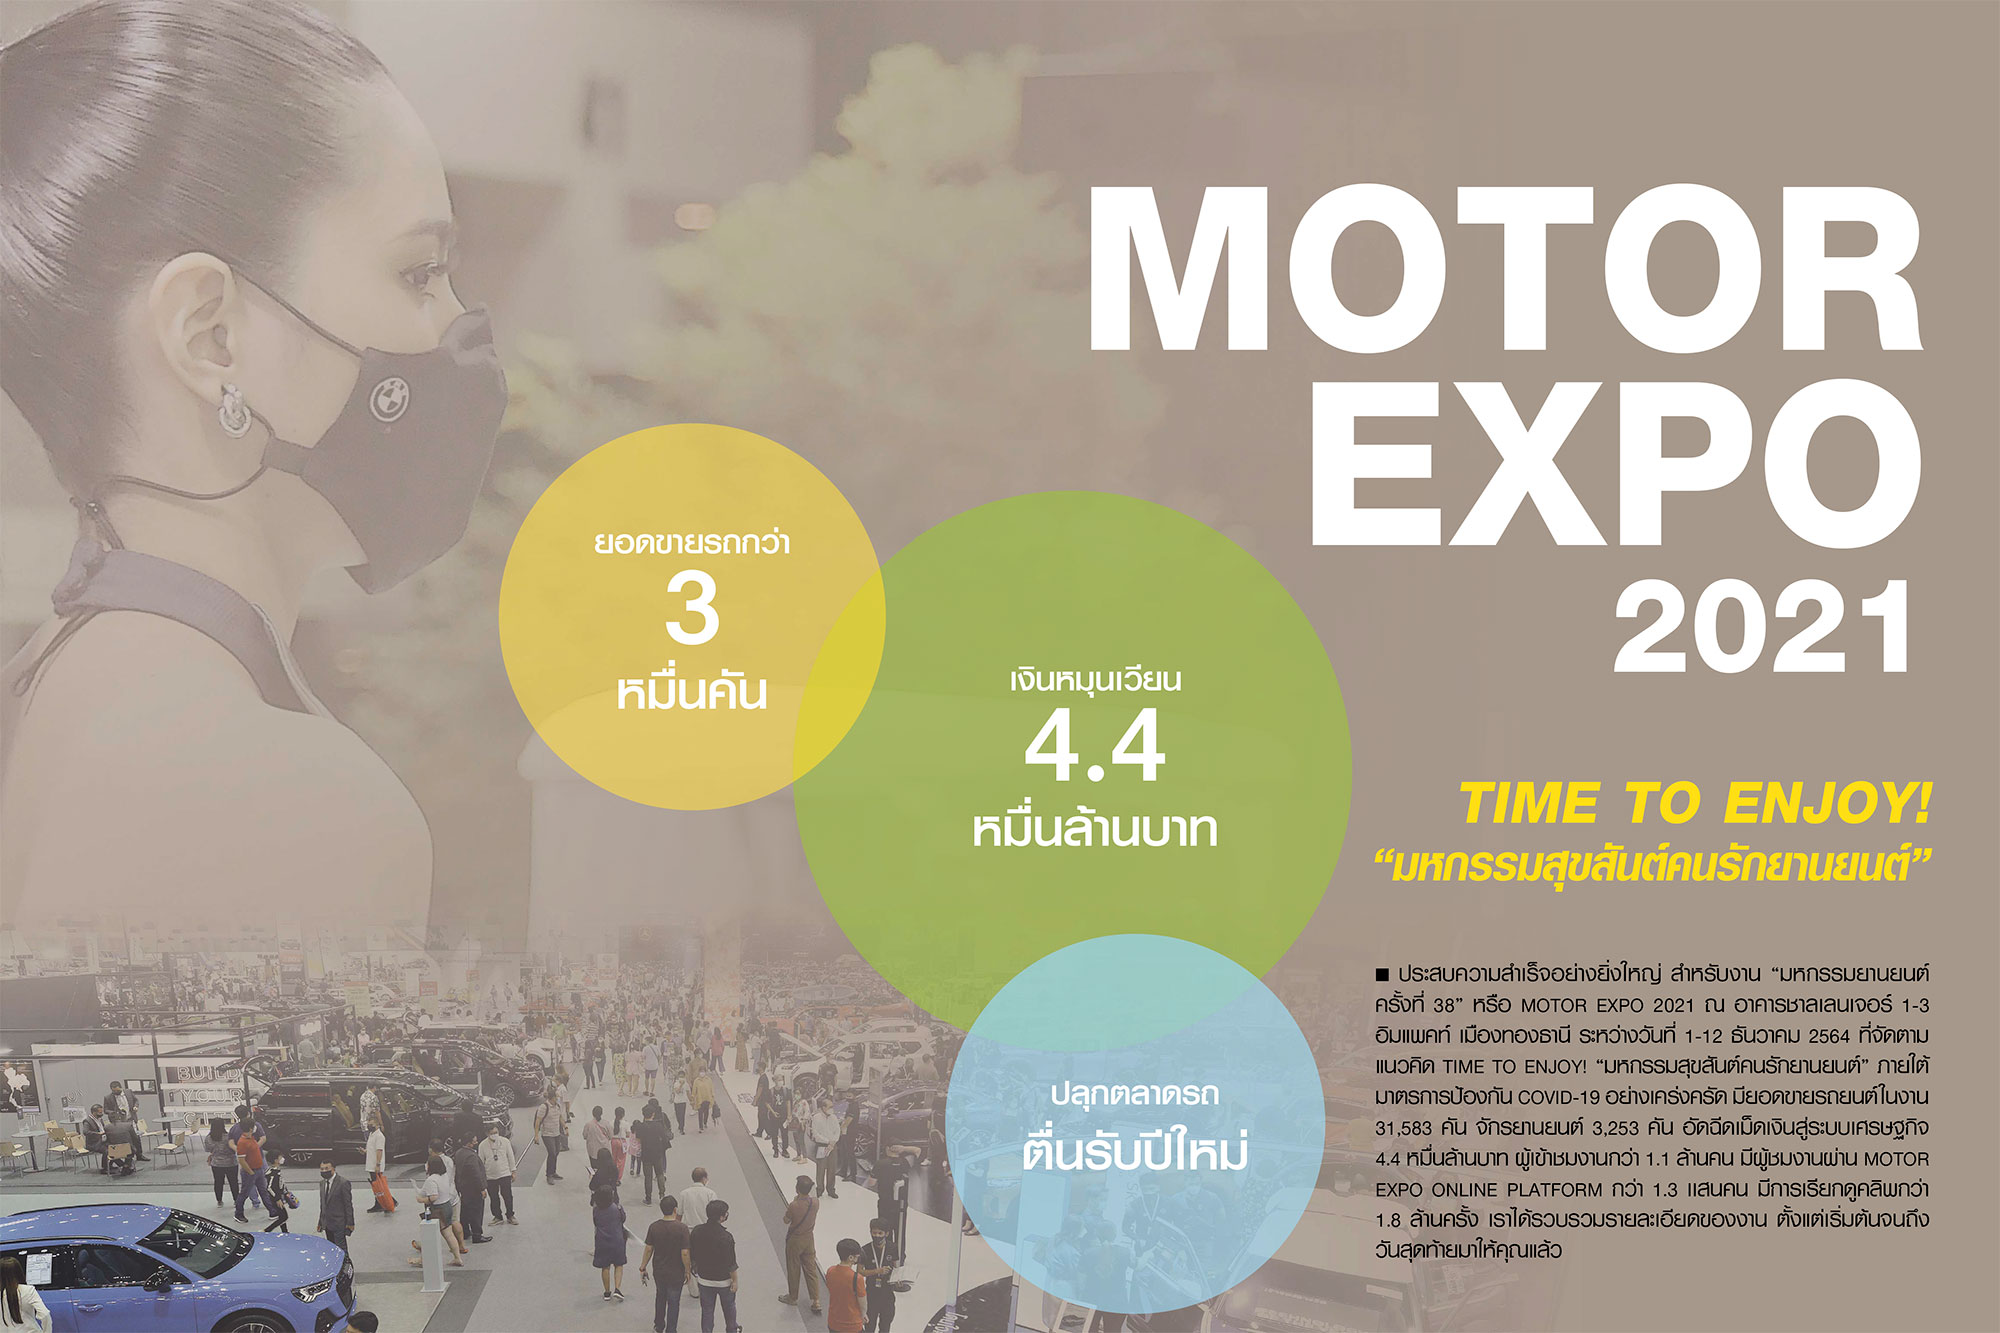 MOTOR EXPO 2021 TIME TO ENJOY! มหกรรมสุขสันต์คนรักยานยนต์